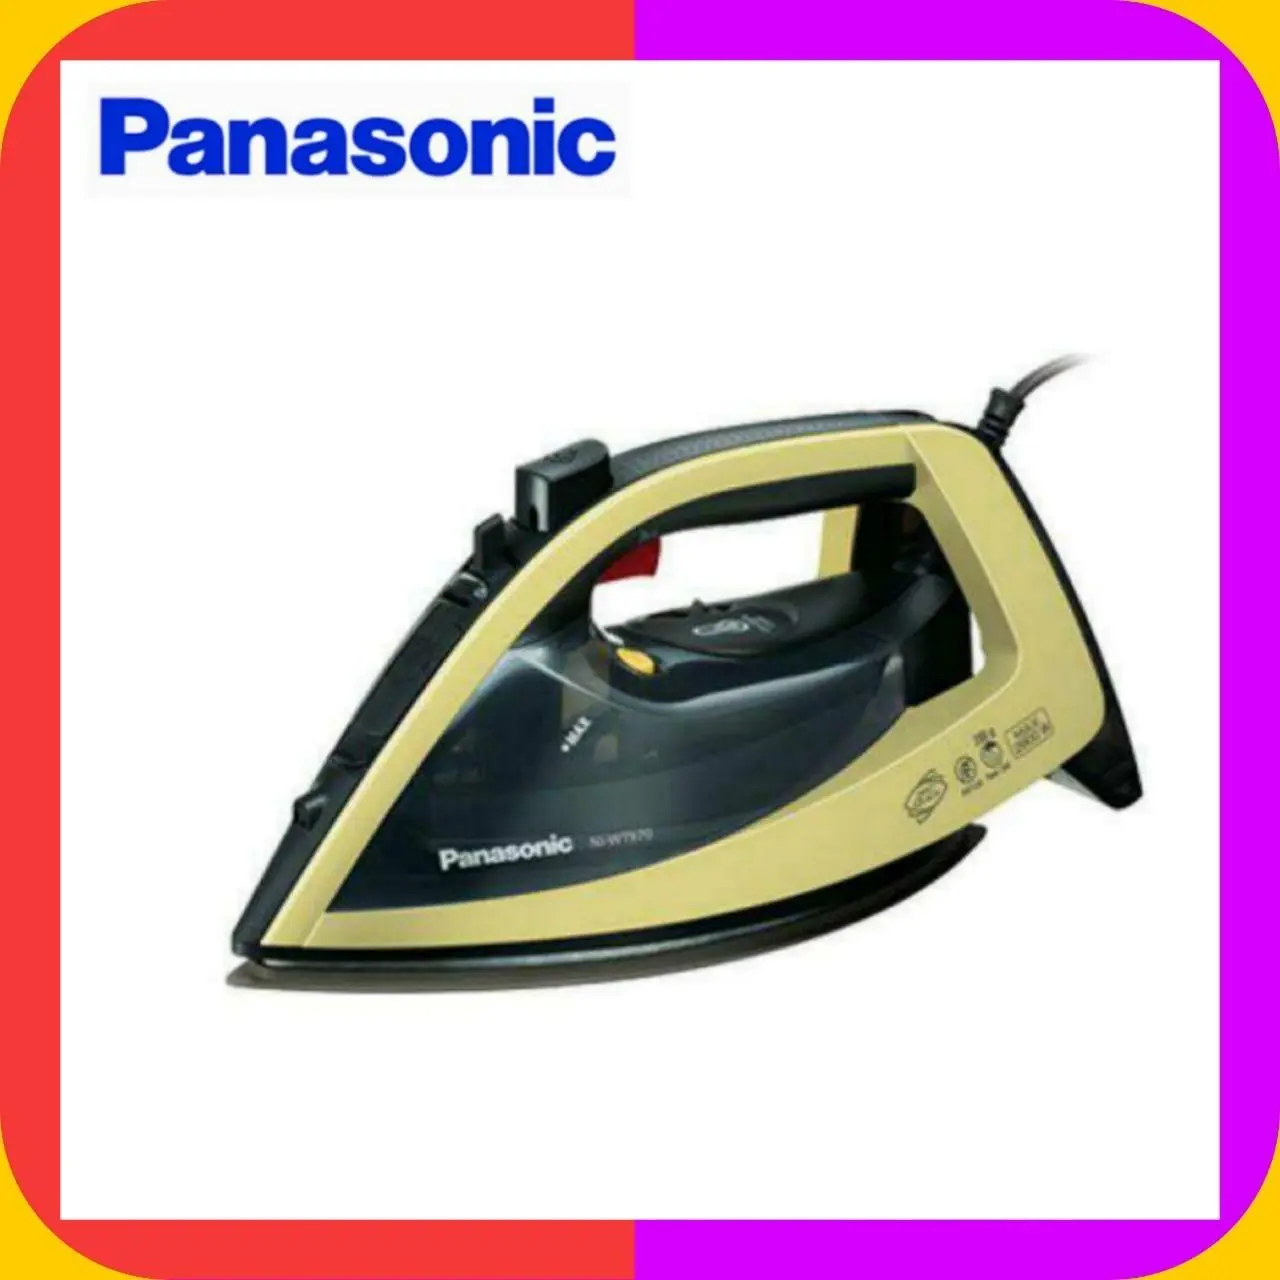 Panasonic เตารีดไอน้ำ พานาโซนิค 2800 วัตต์ รุ่น NI-WT970NFS Panasonic Stream Iron 2800 Watt Model NI-WT970NFS